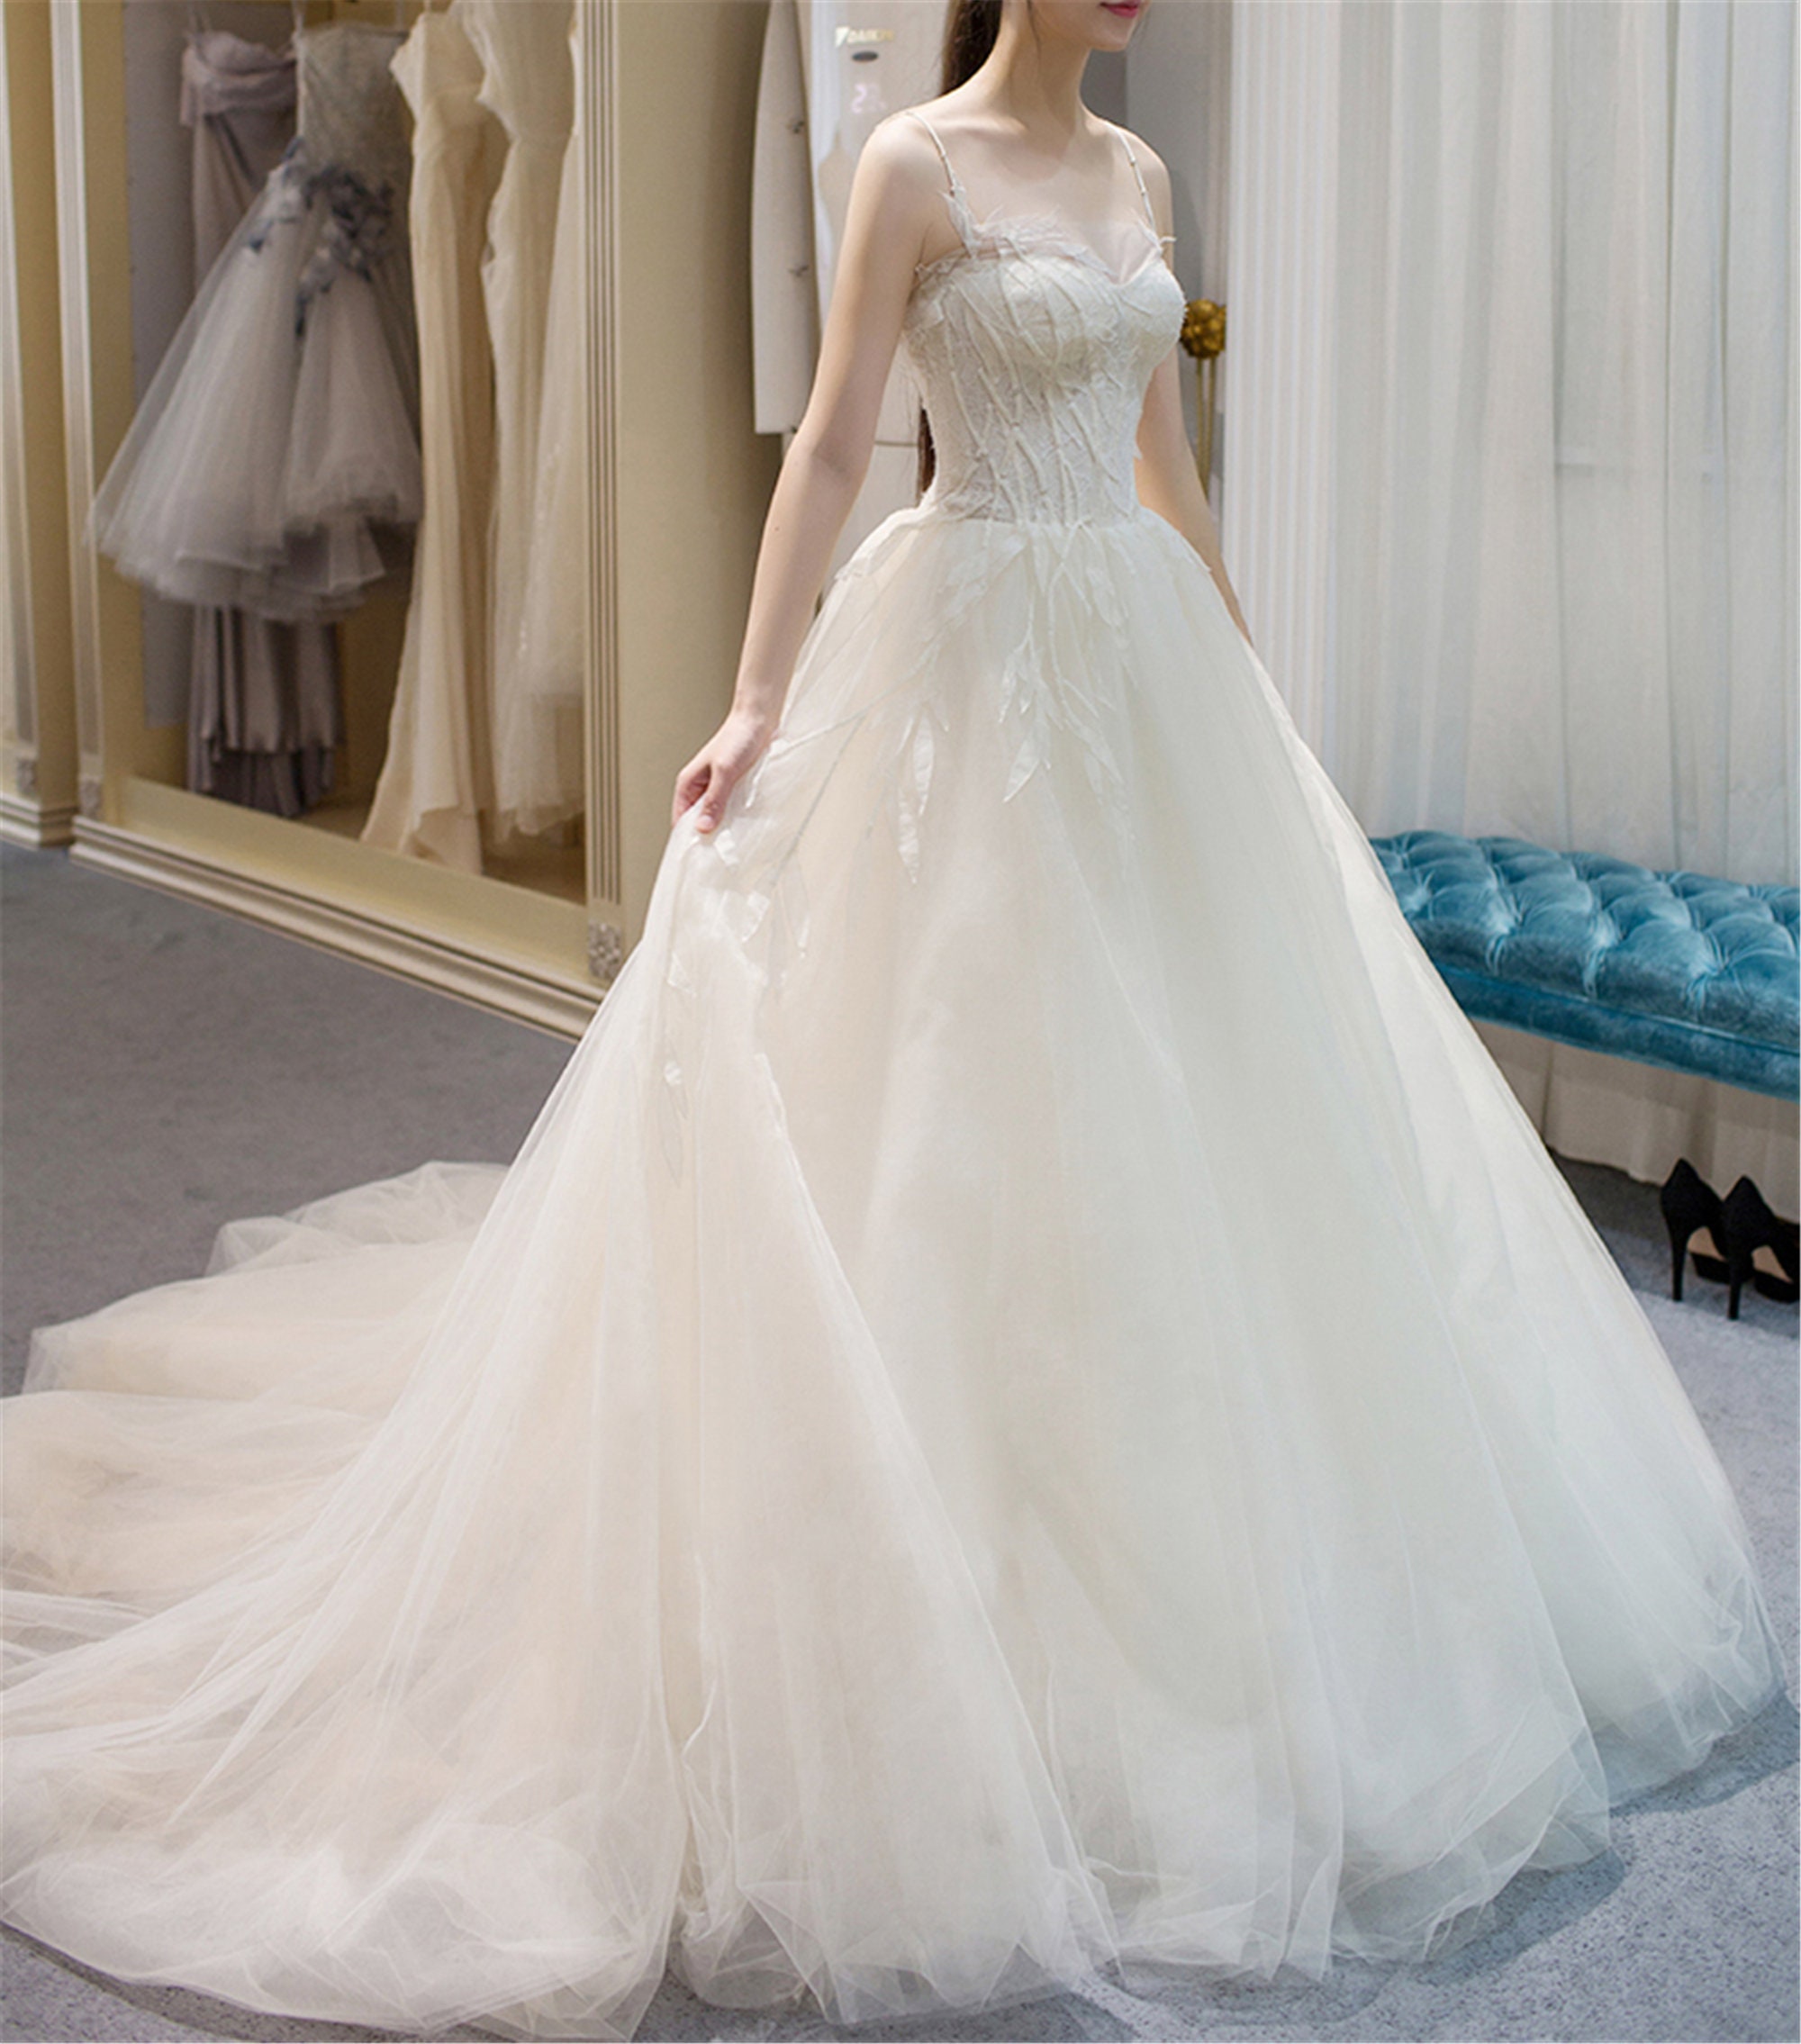 Lace Applique Wedding Dress Dreamy A Line Wedding Dress | Etsy